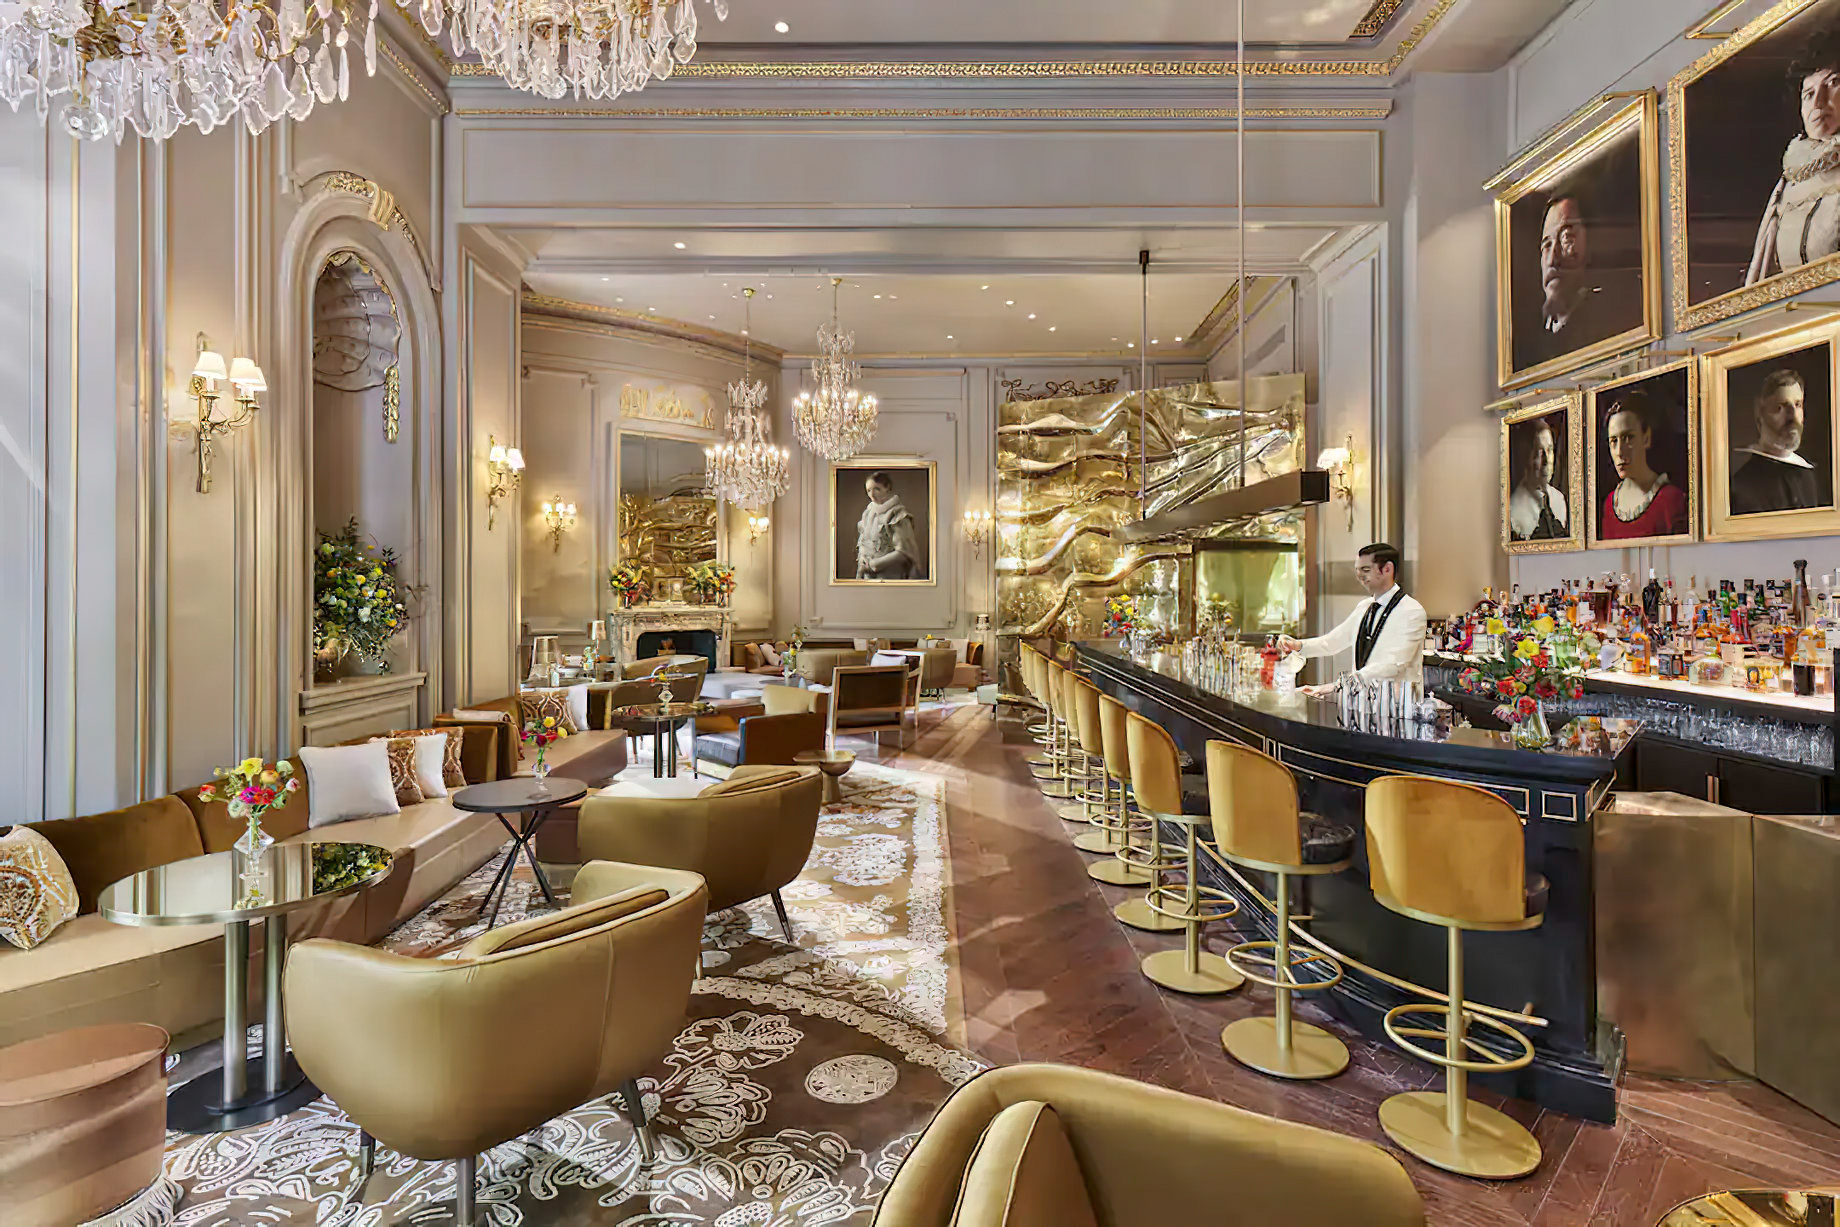 Mandarin Oriental Ritz, Madrid Hotel - Madrid, Spain - Pictura Bar